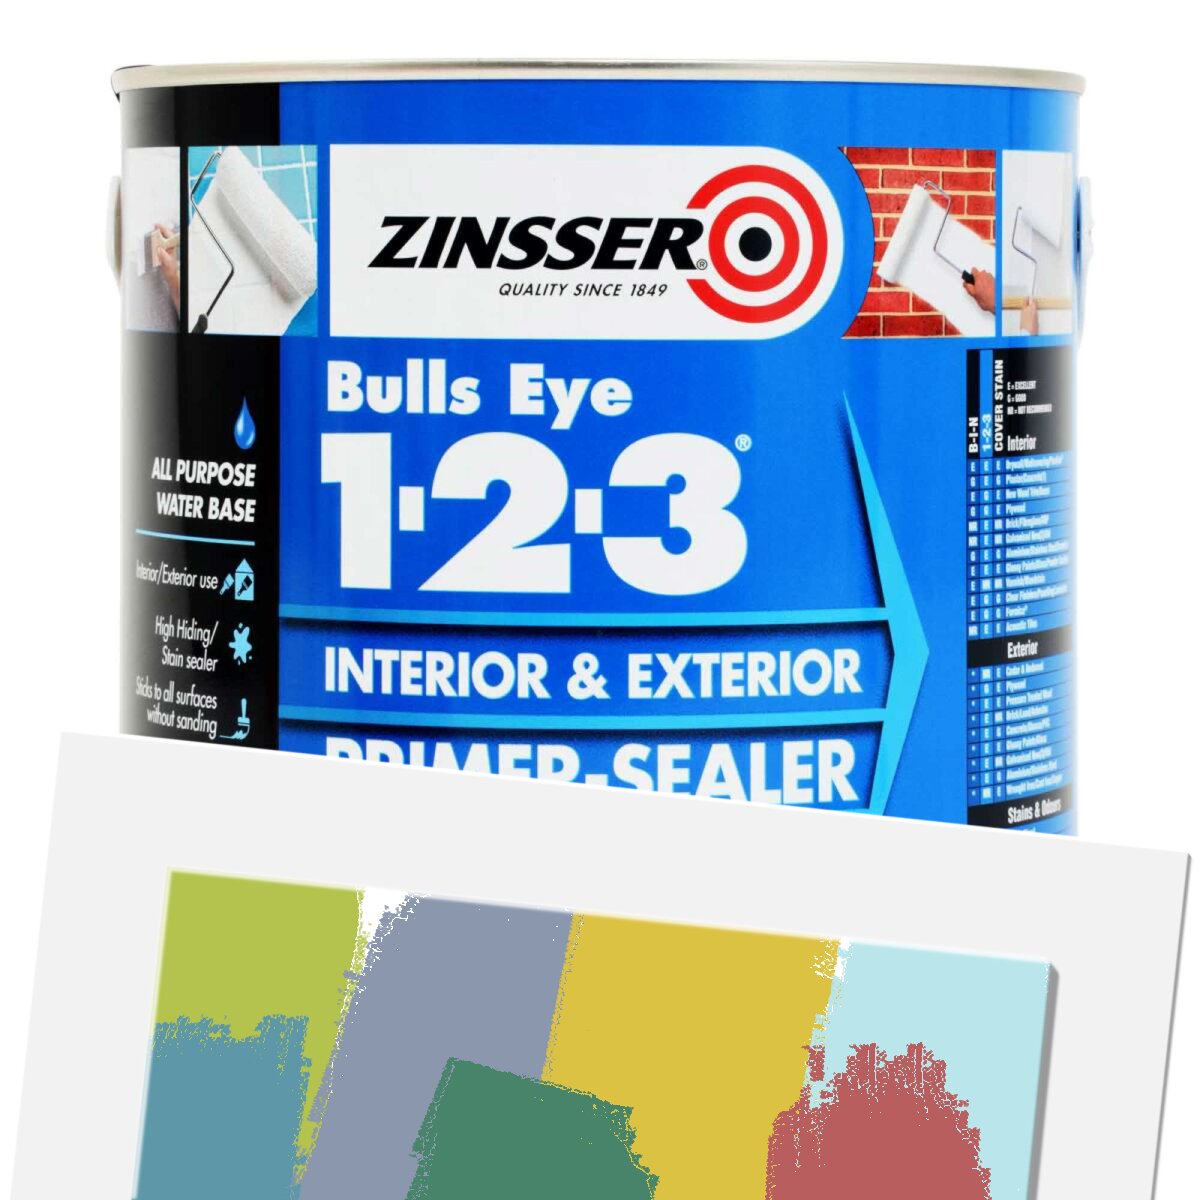 Zinsser Bulls Eye 123 (Tinted) 6017 2.5L Can You Paint Over Zinsser Sealcoat